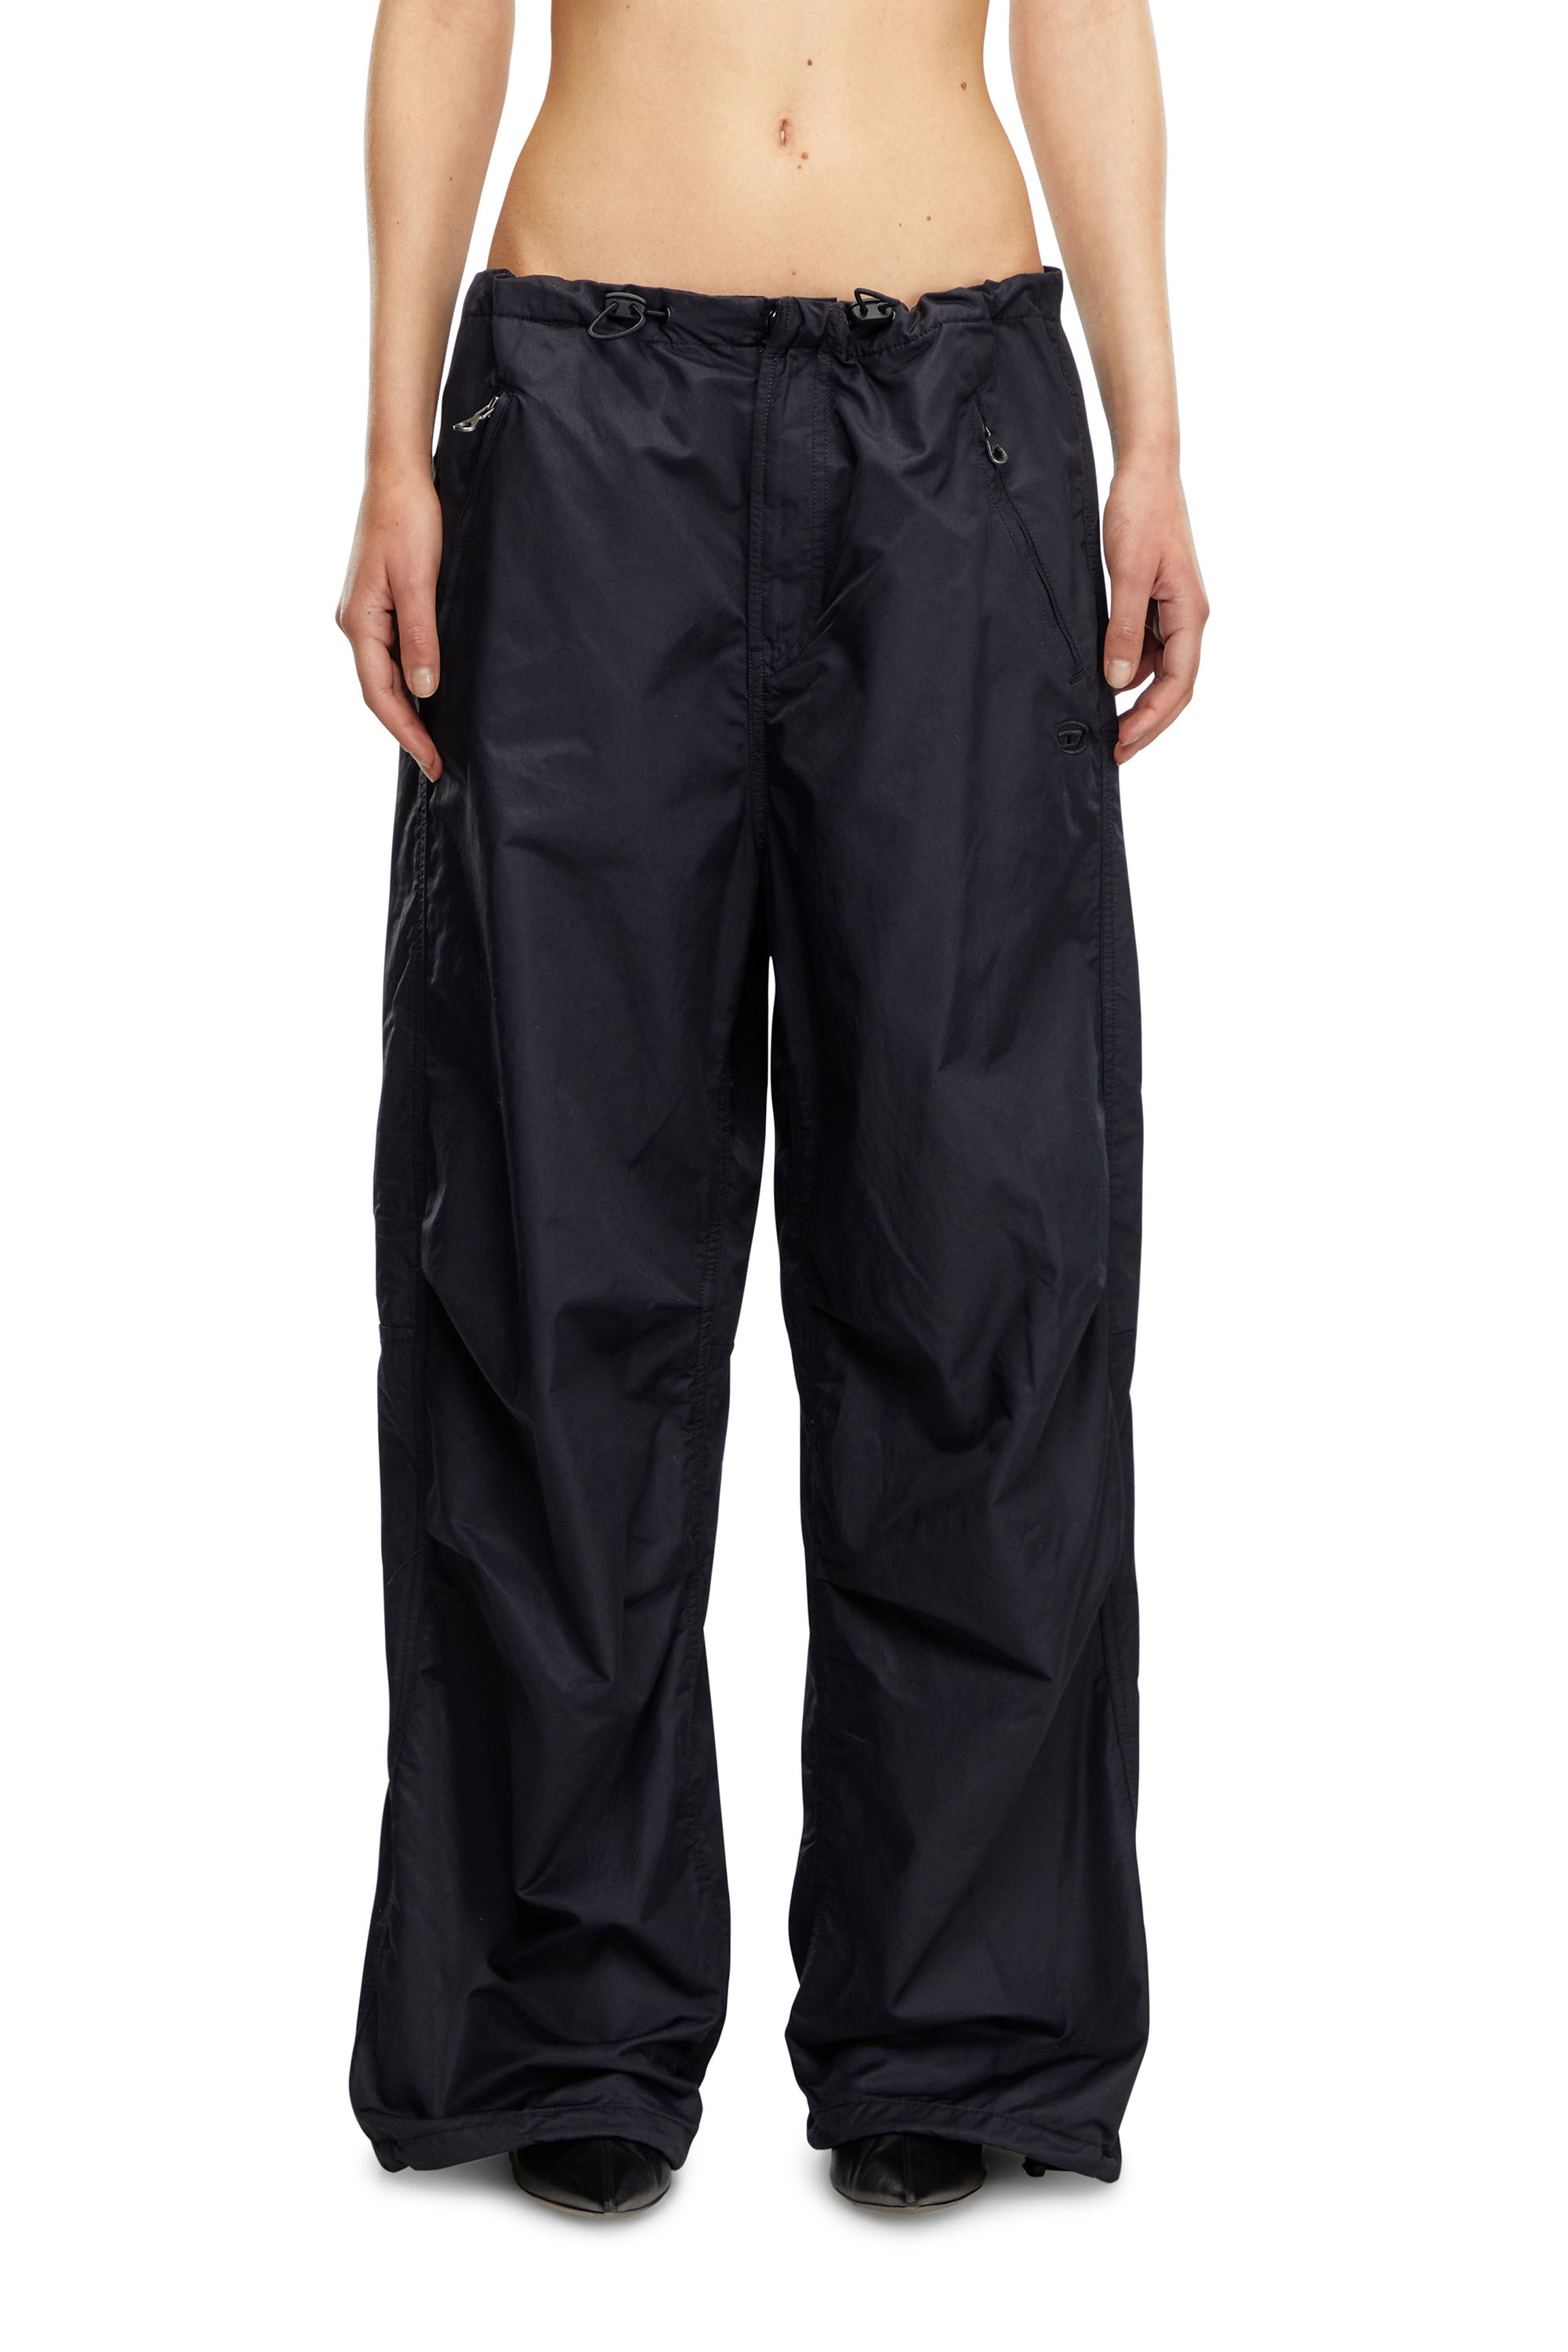 Diesel - Pantalones cargo ergonómicos de microsarga - Pantalones - Mujer - Negro